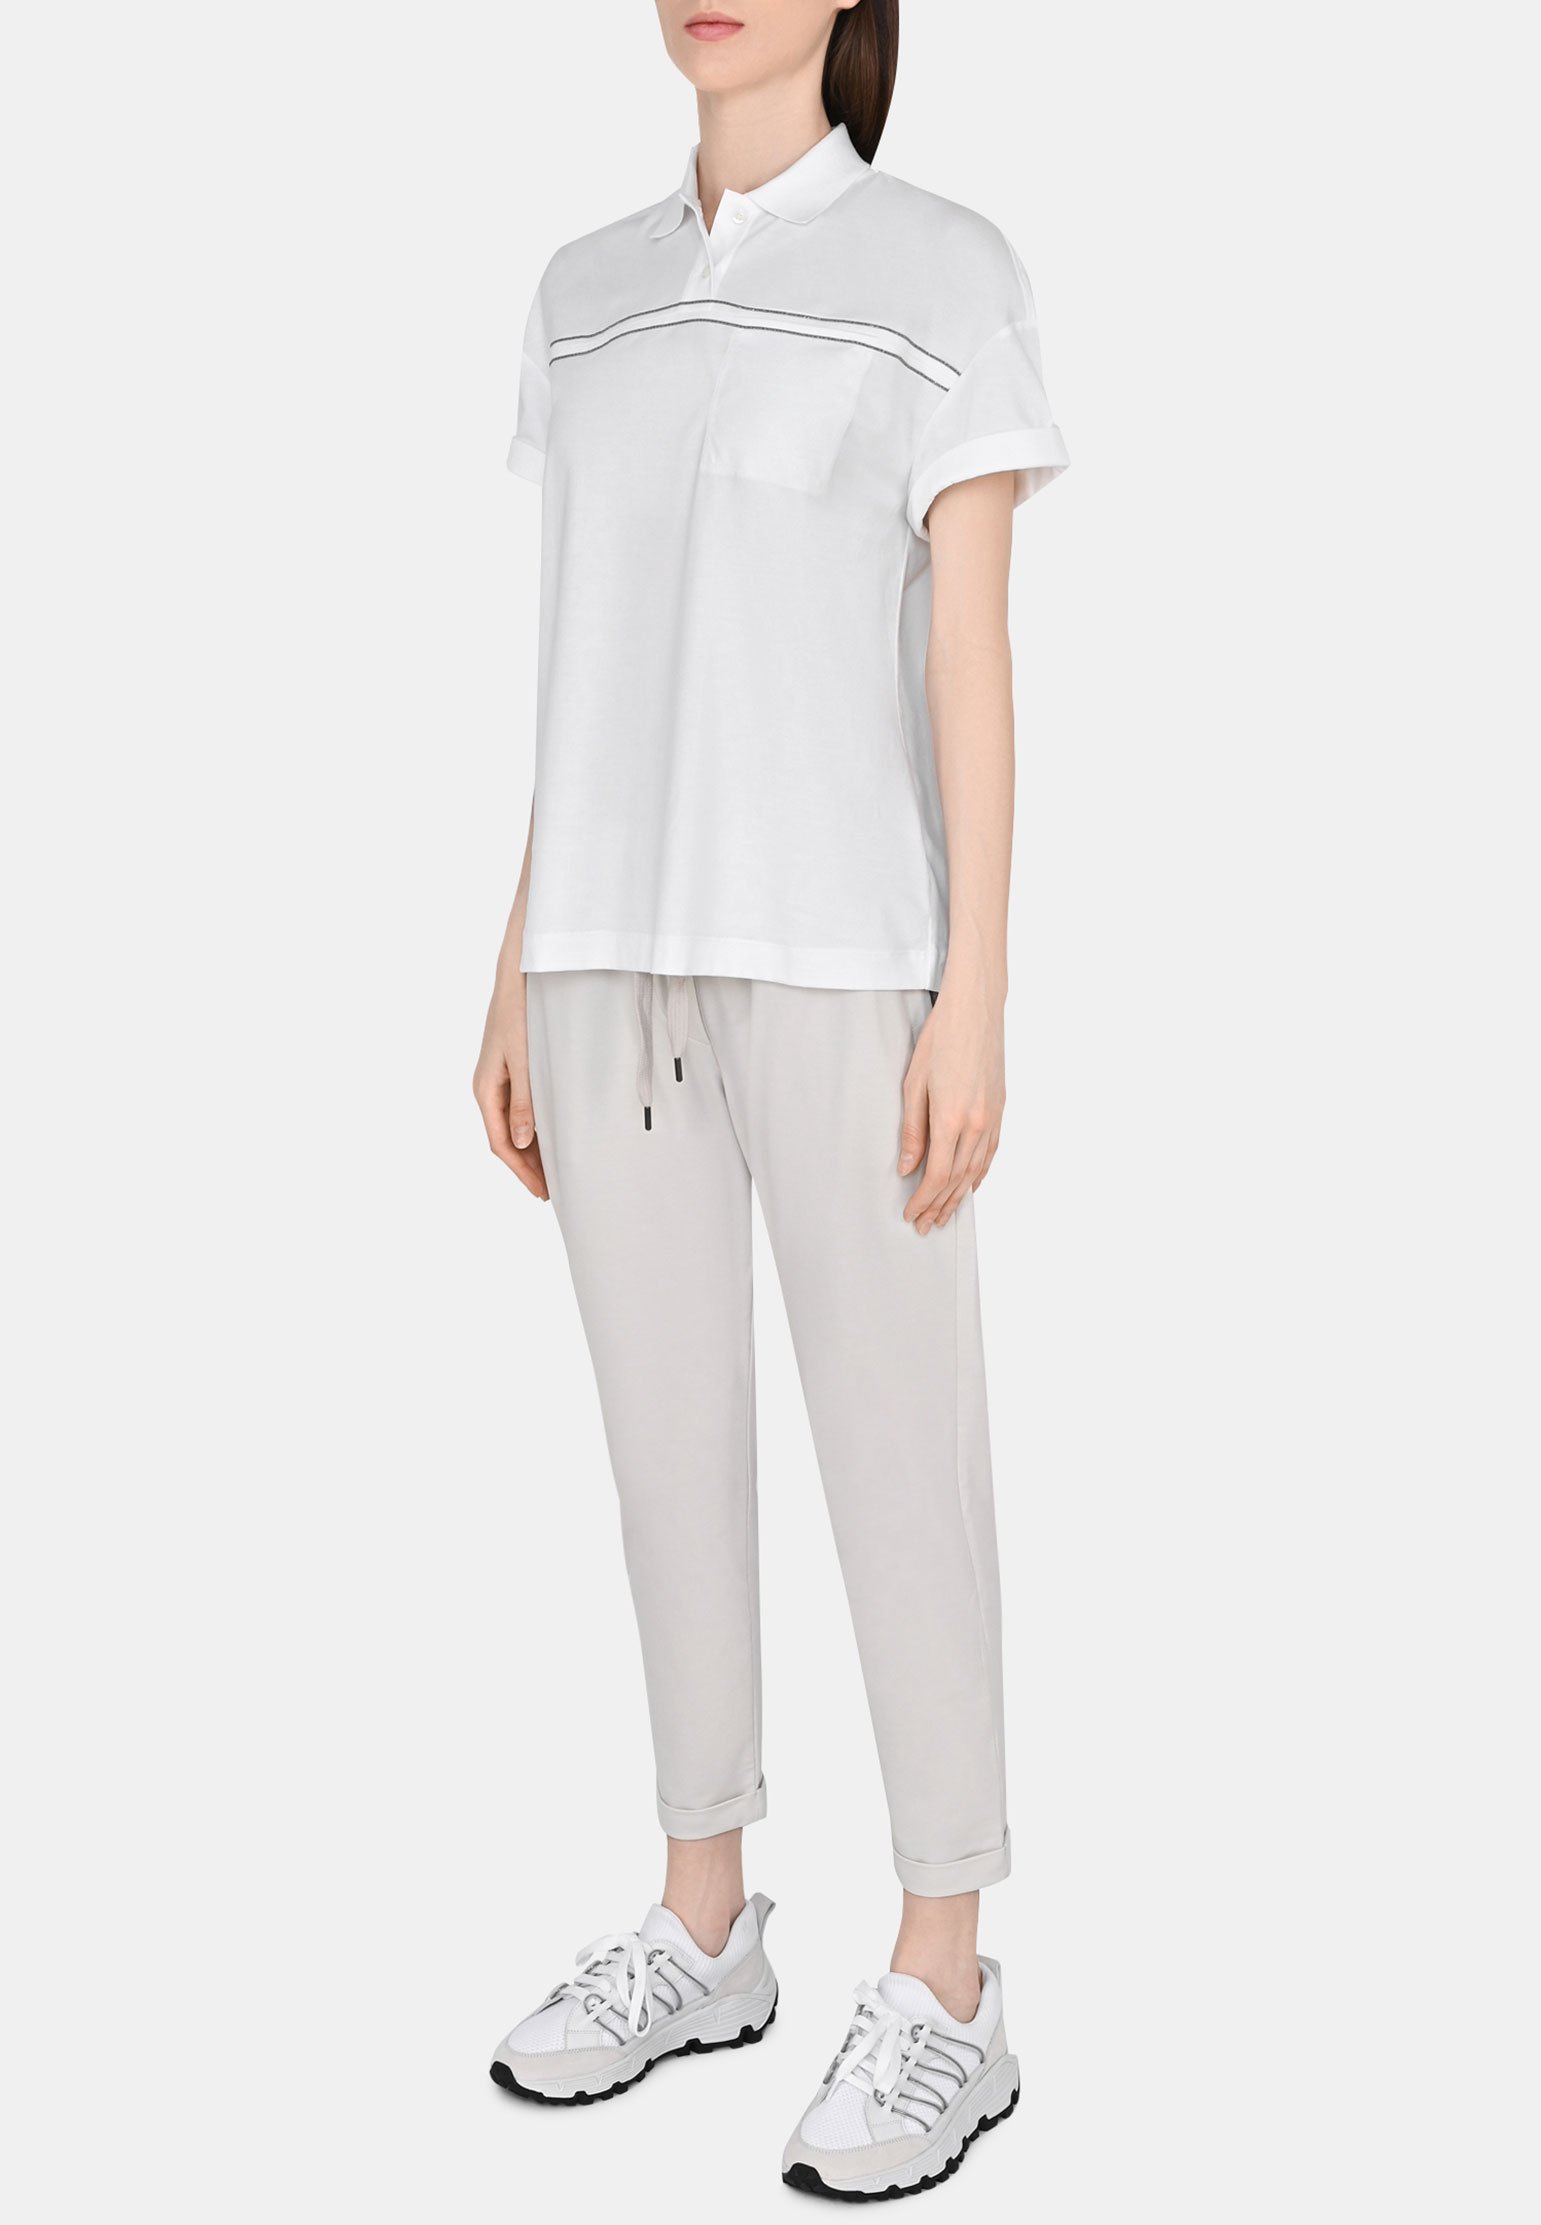 T-Shirt BRUNELLO CUCINELLI Color: white (Code: 546) in online store Allure